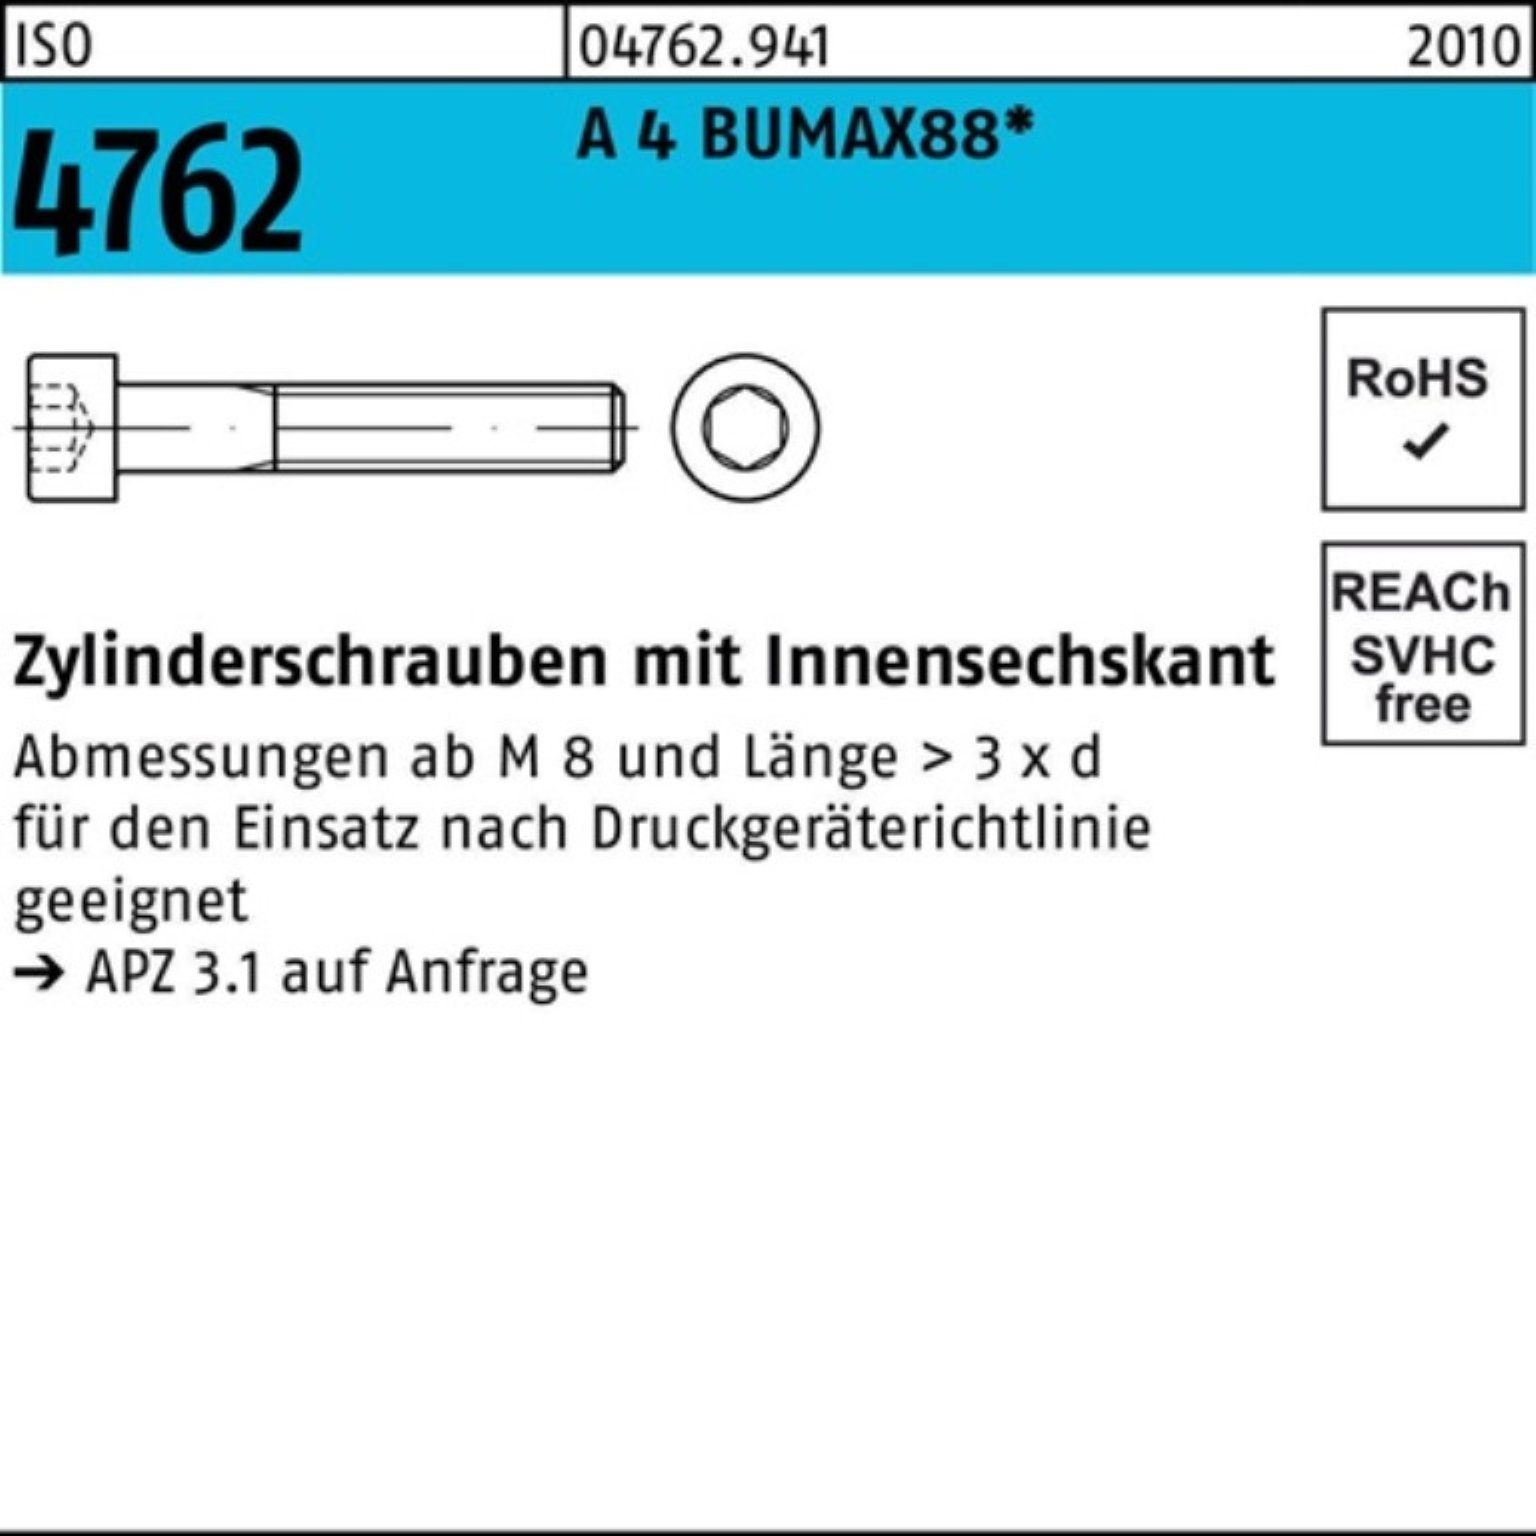 100 Zylinderschraube Bufab Zylinderschraube 30 100er 4 M5x 4762 ISO BUMAX88 Pack A Innen-6kt